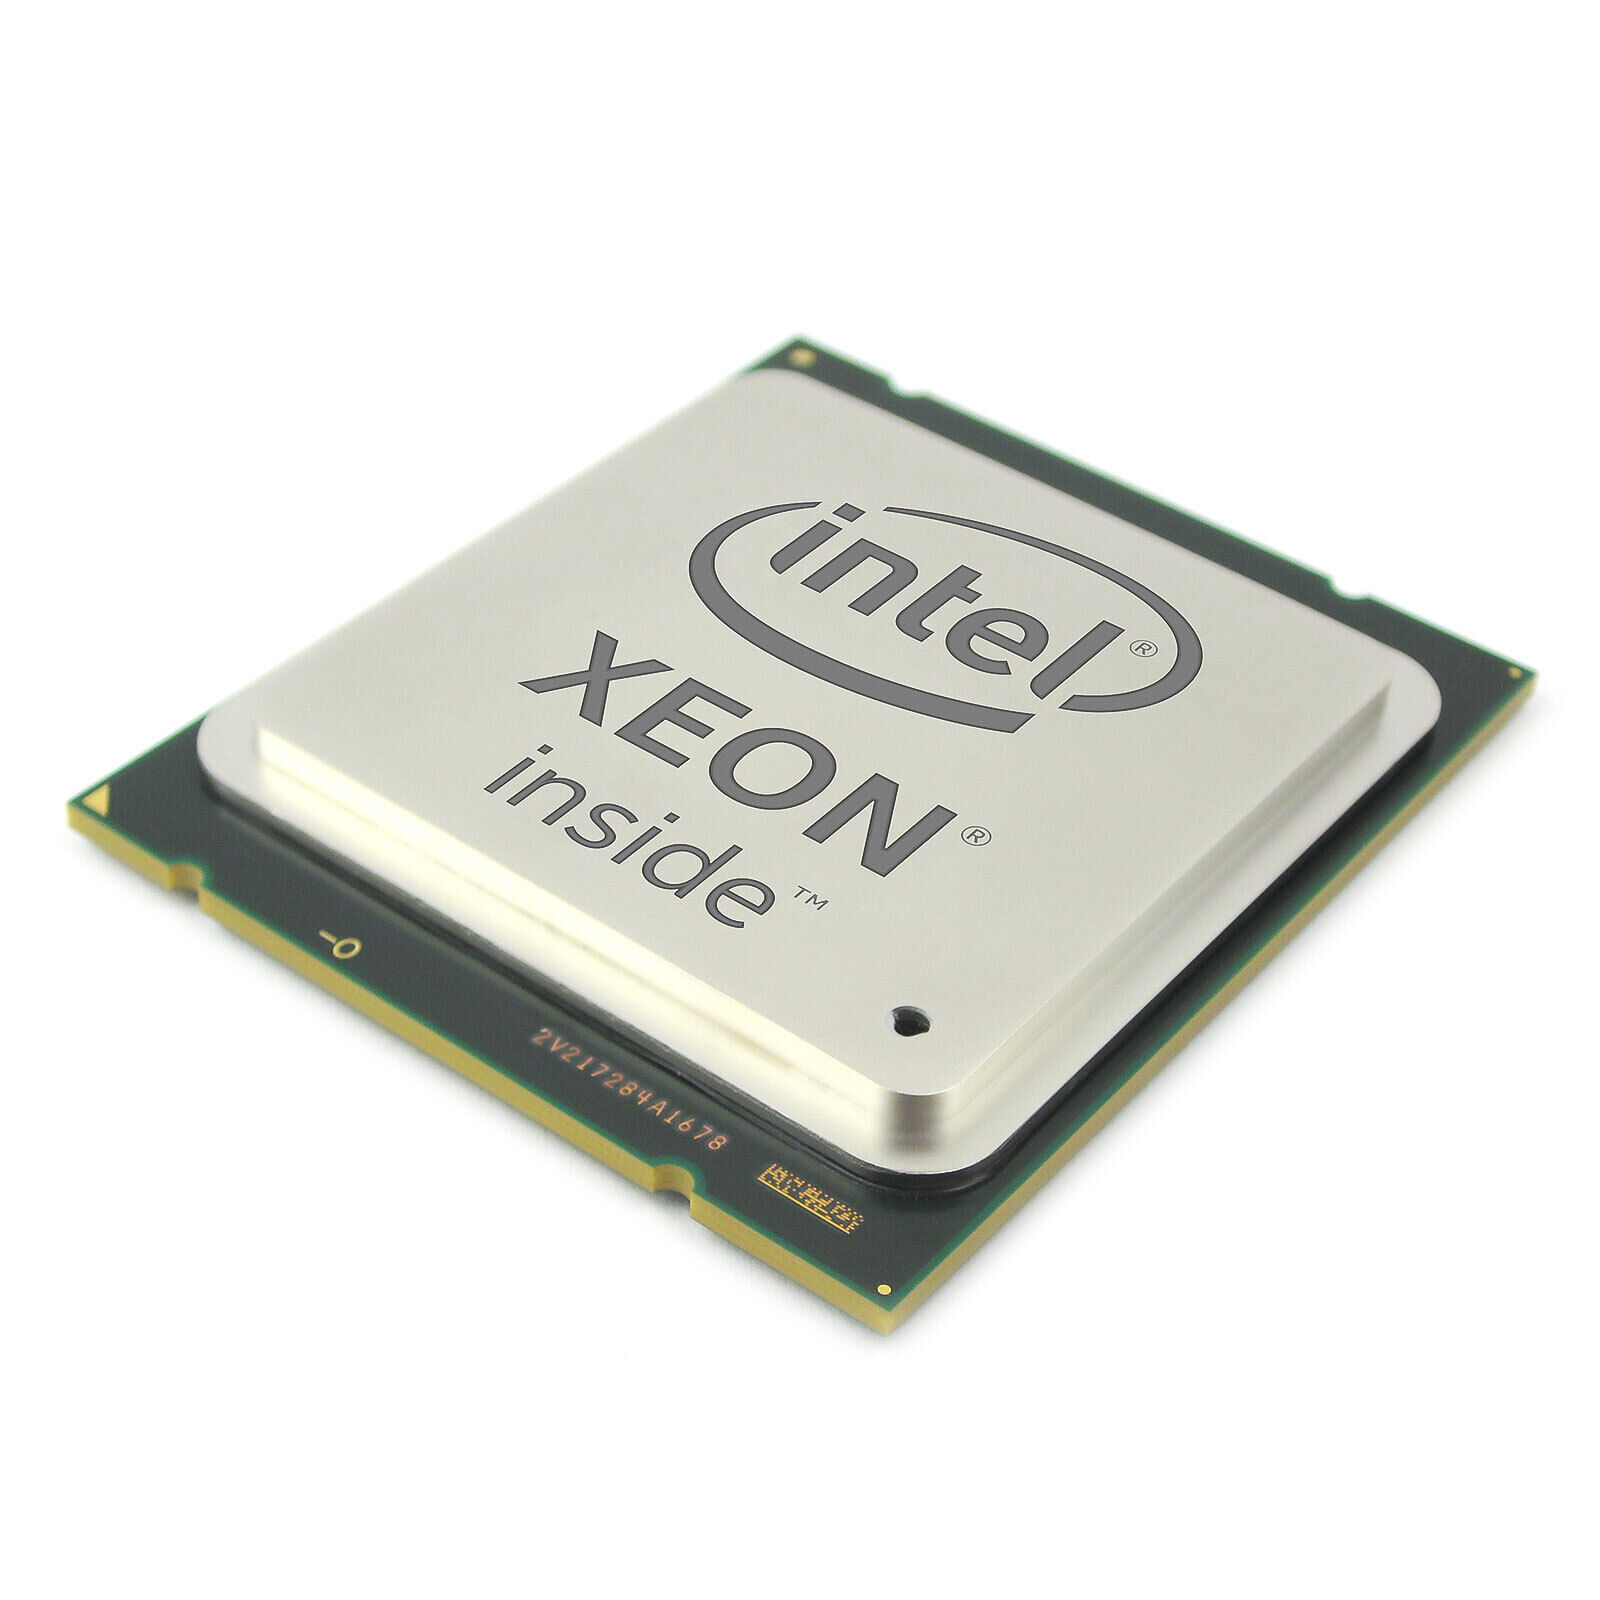 Intel Xeon E5-2407 v2 2.40GHz Quad Core LGA 1356 / Socket B2 Processor SR1AK